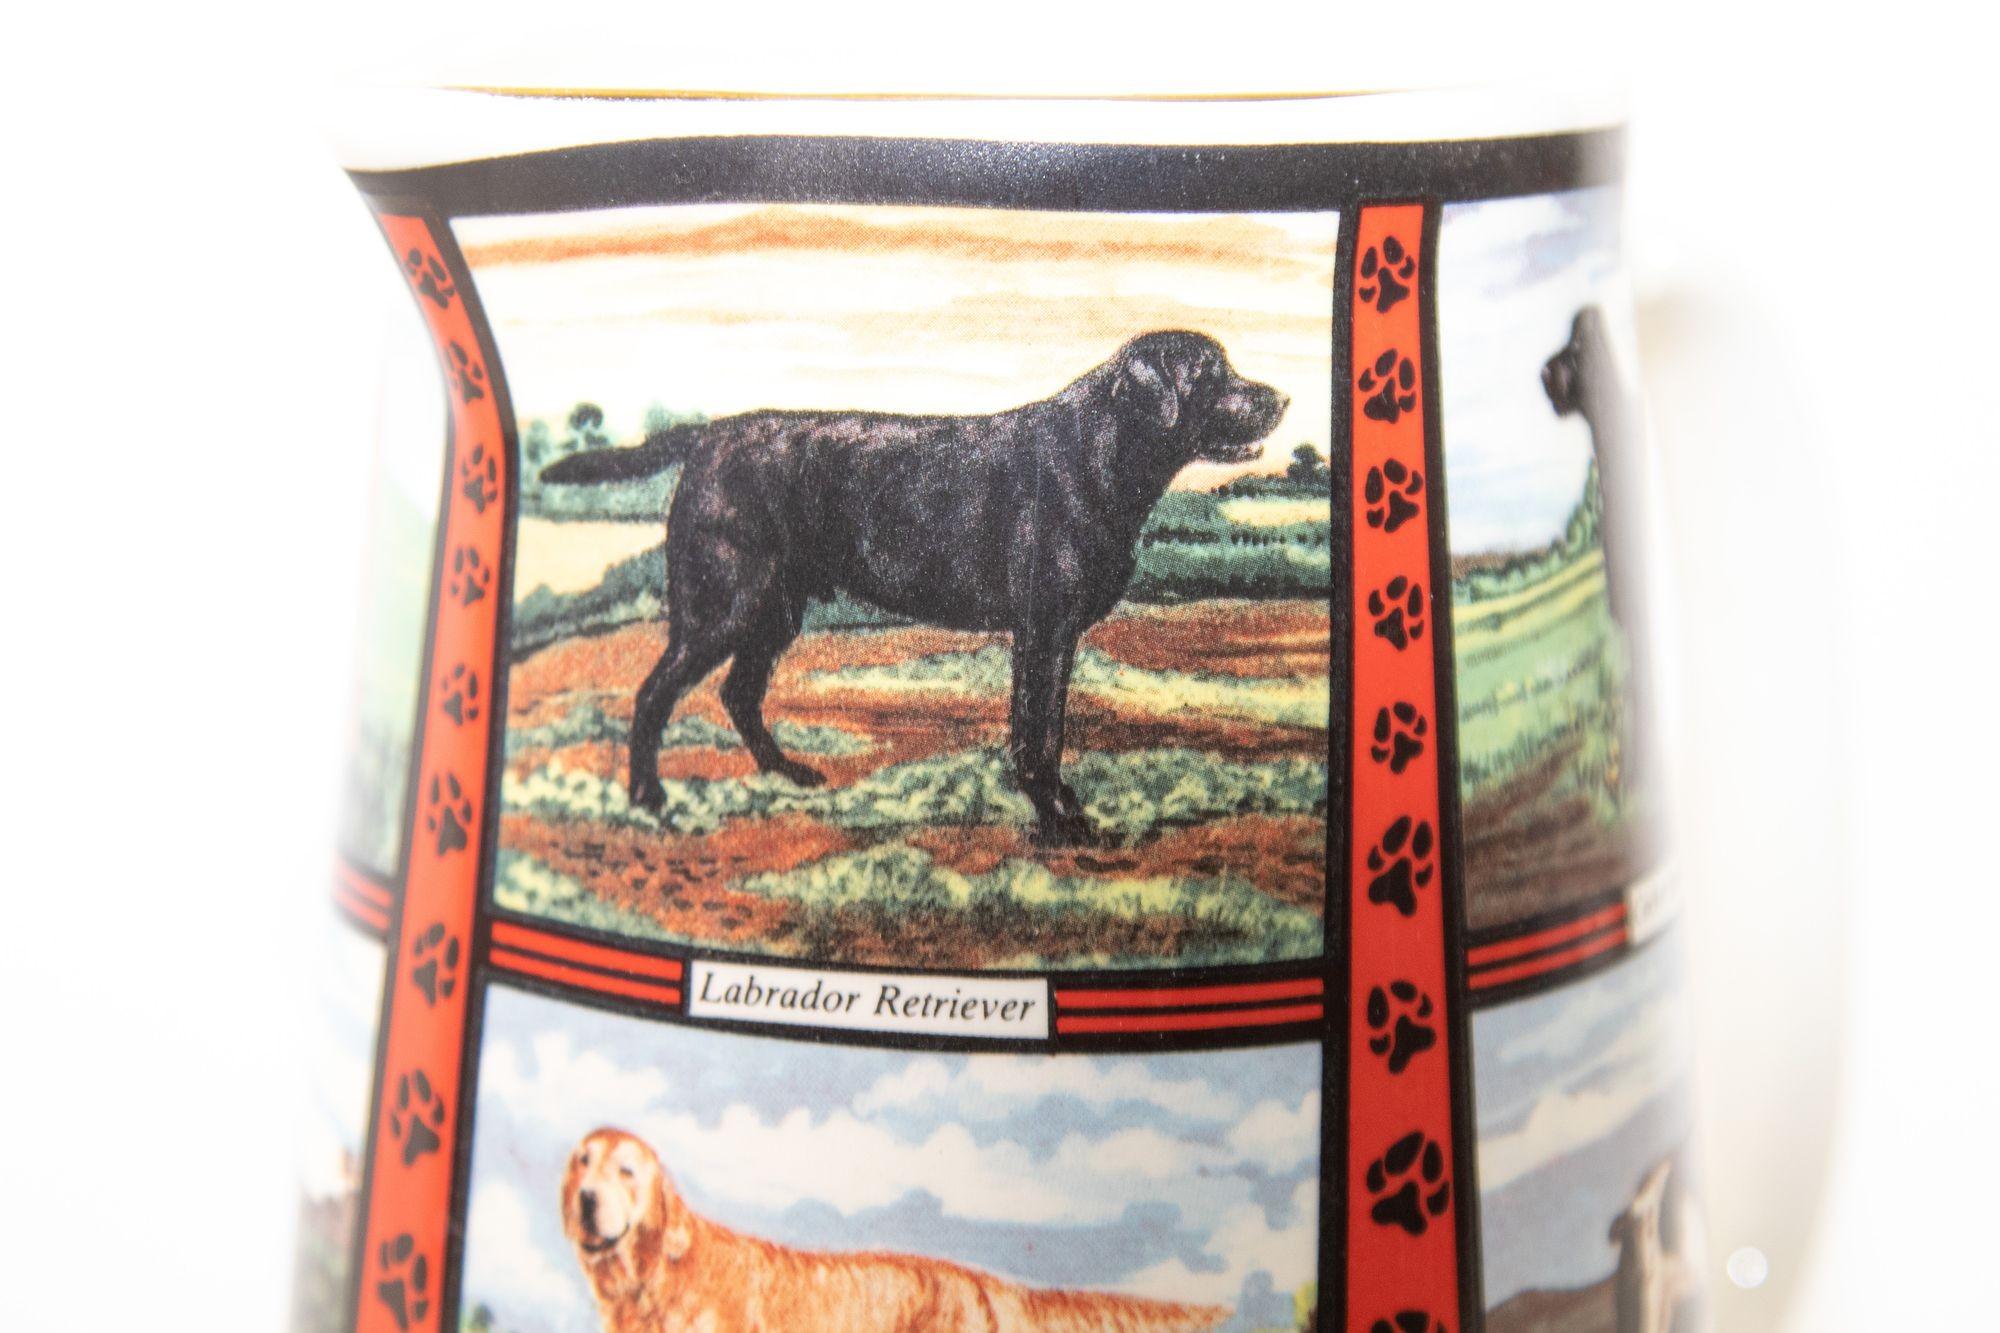 Vintage 1970s Ceramic Pitcher, Derbyshire England with Dog Breeds Pictures For Sale 8